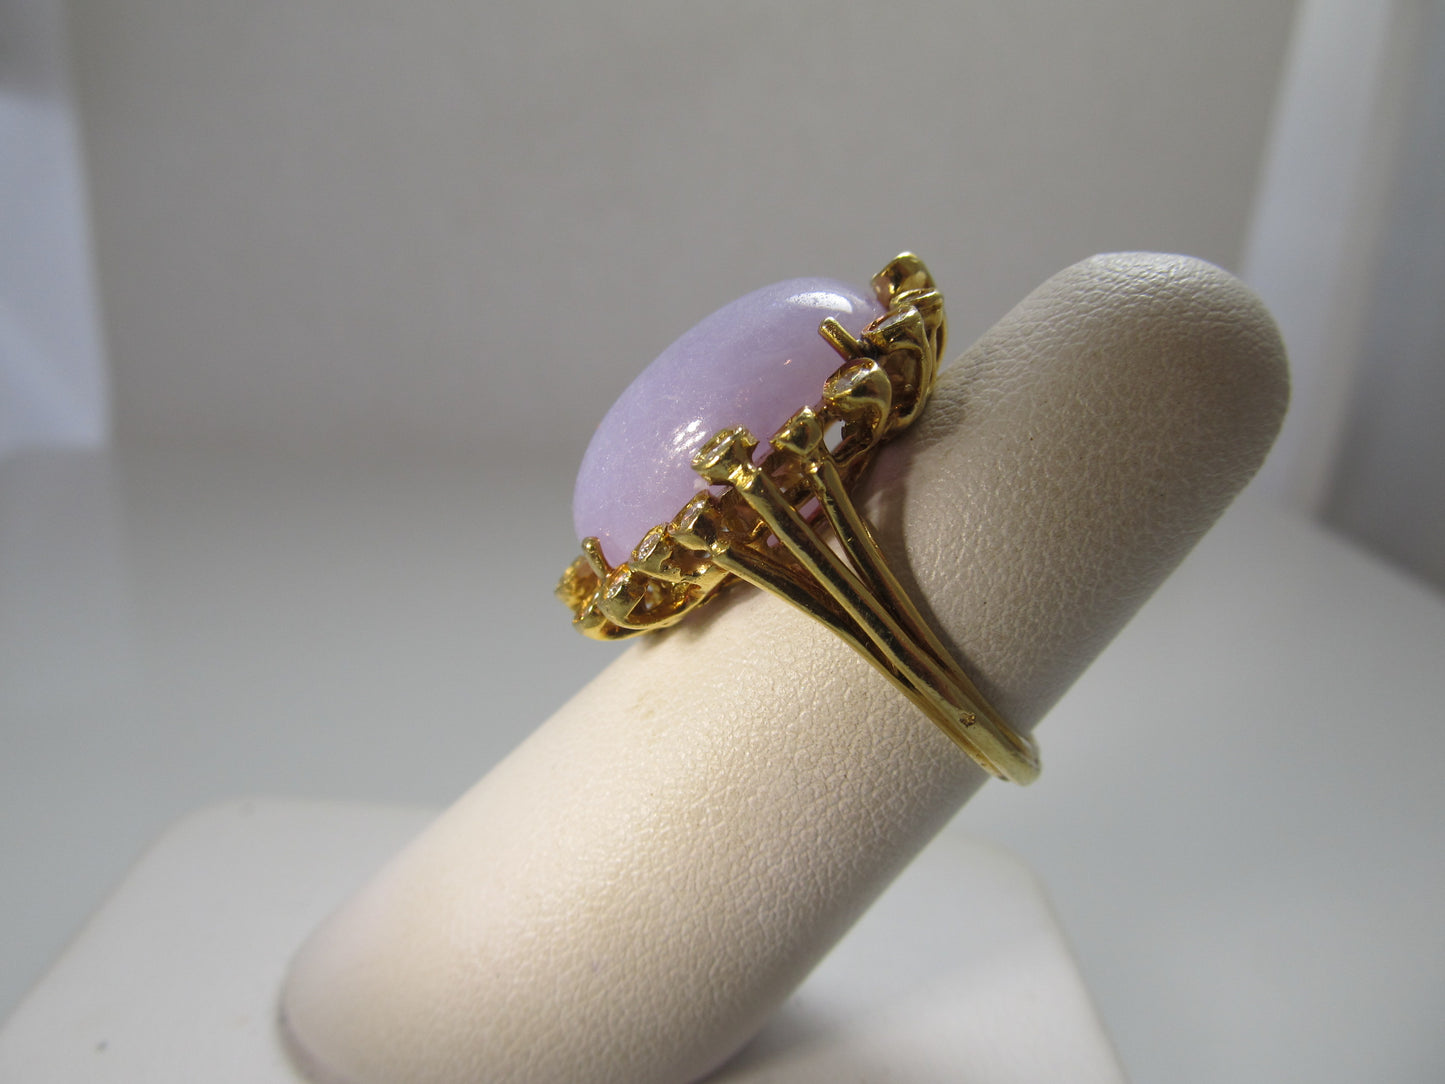 Lavender jade and diamond ring